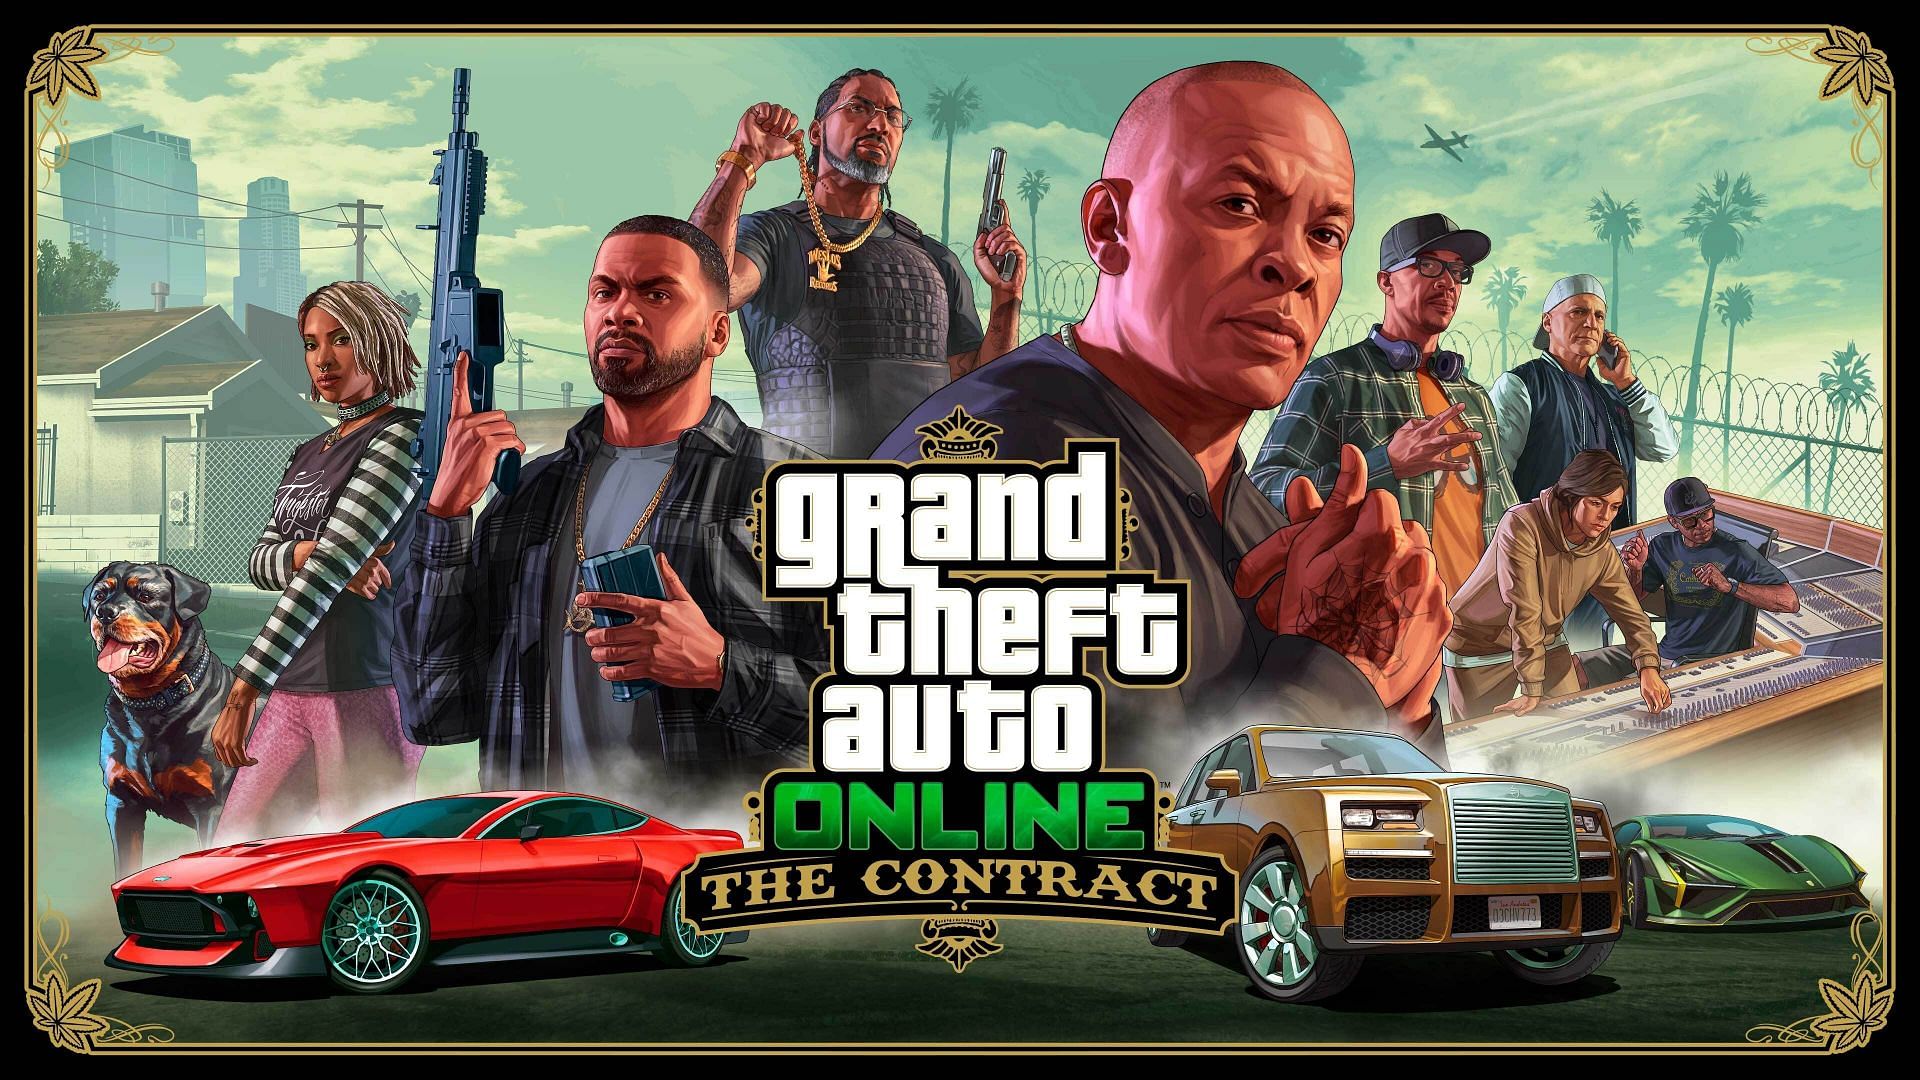 The Contract (Image via Rockstar Games)